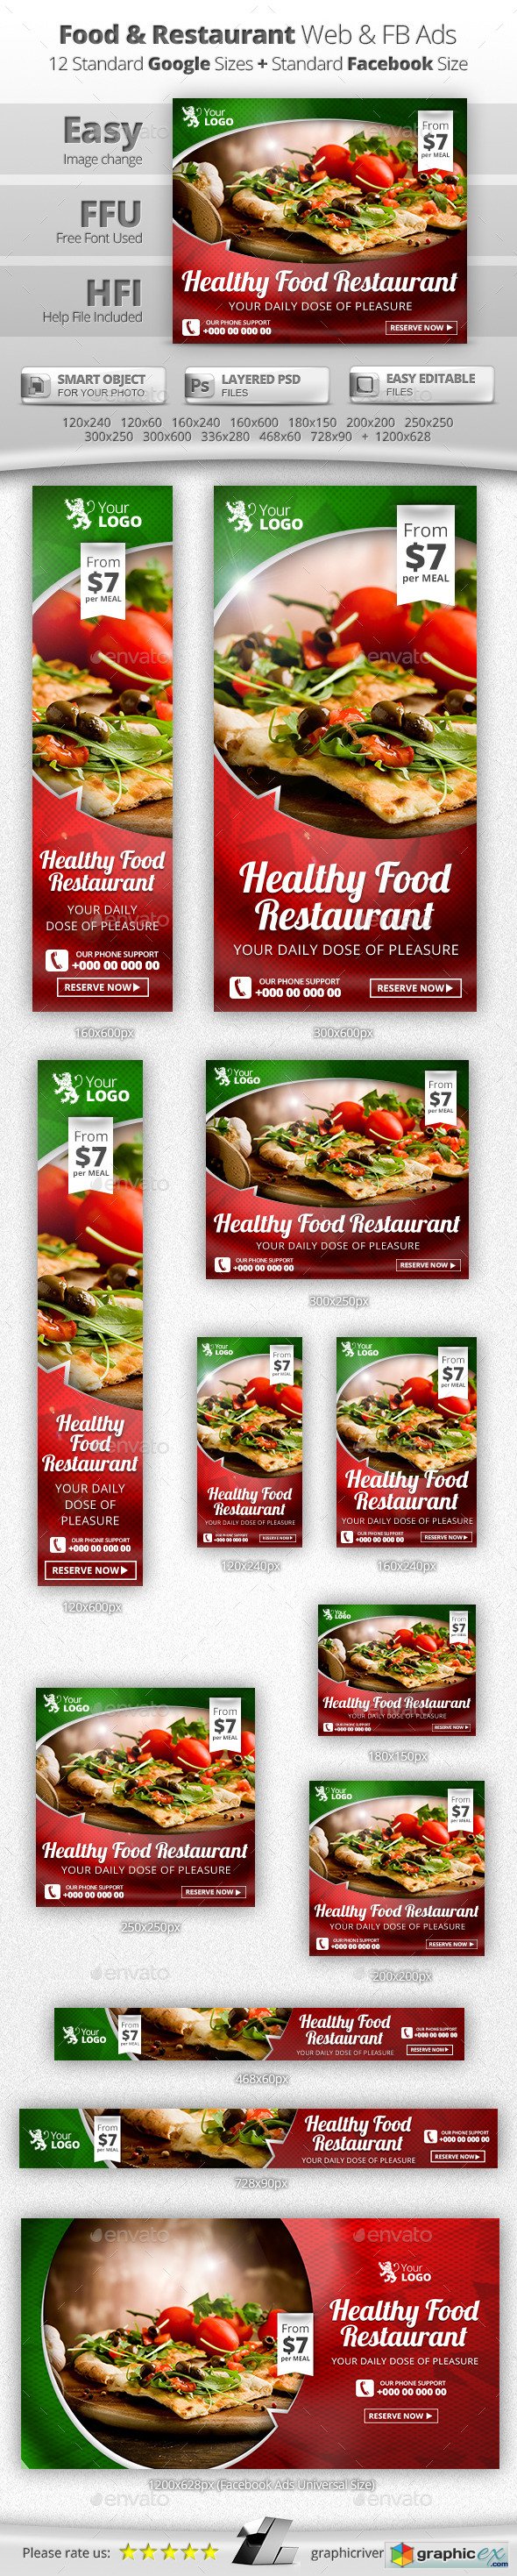 Food & Restaurant Web & Facebook Banners